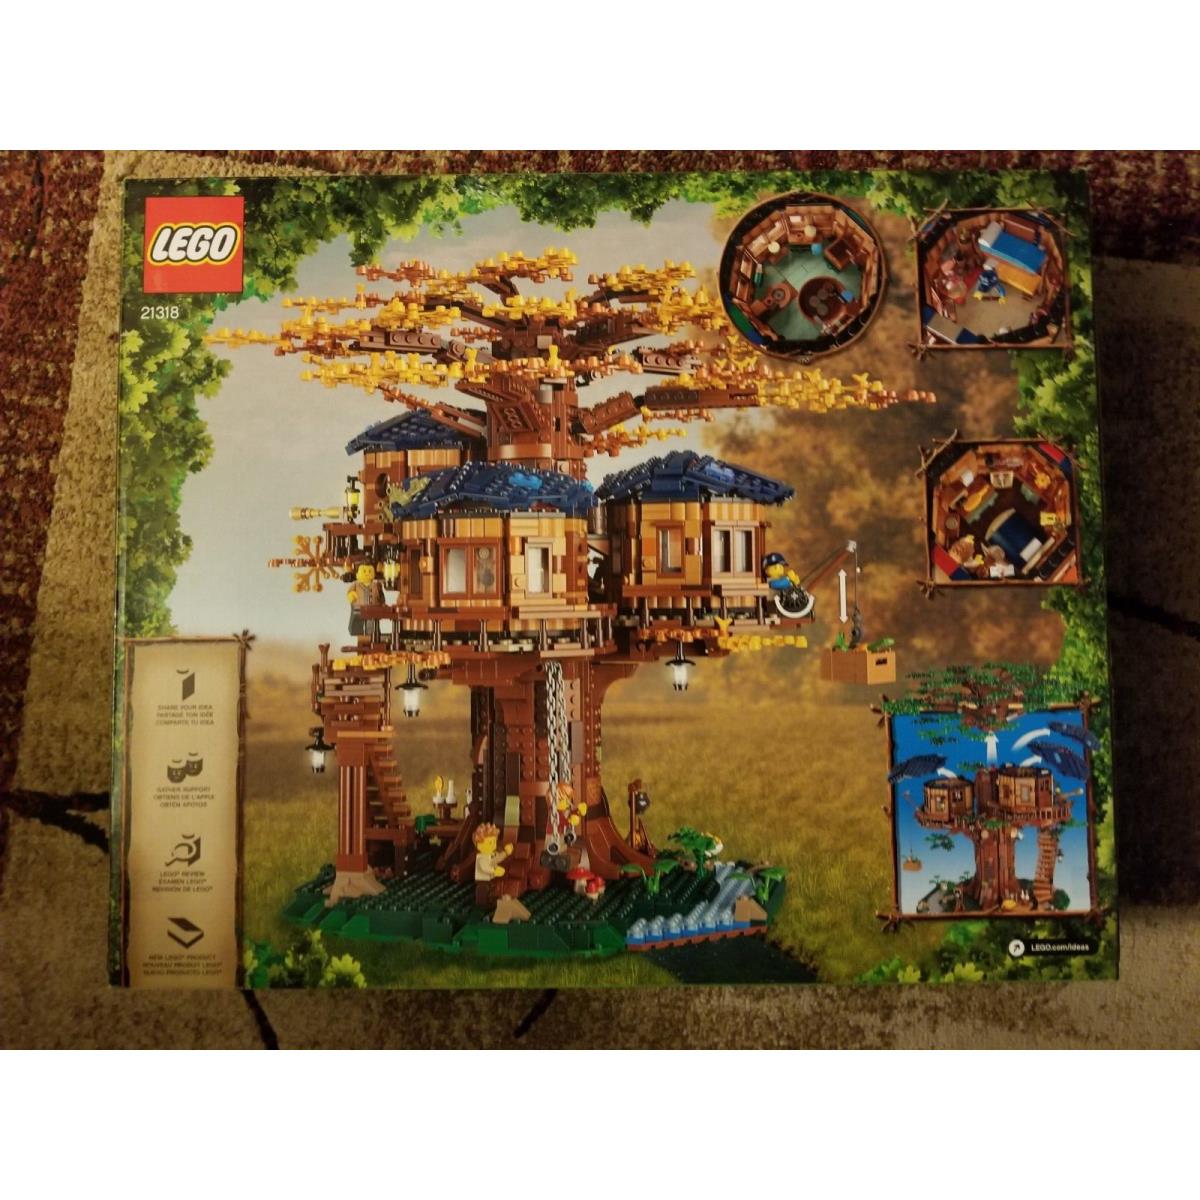 21318 Lego Ideas Treehouse